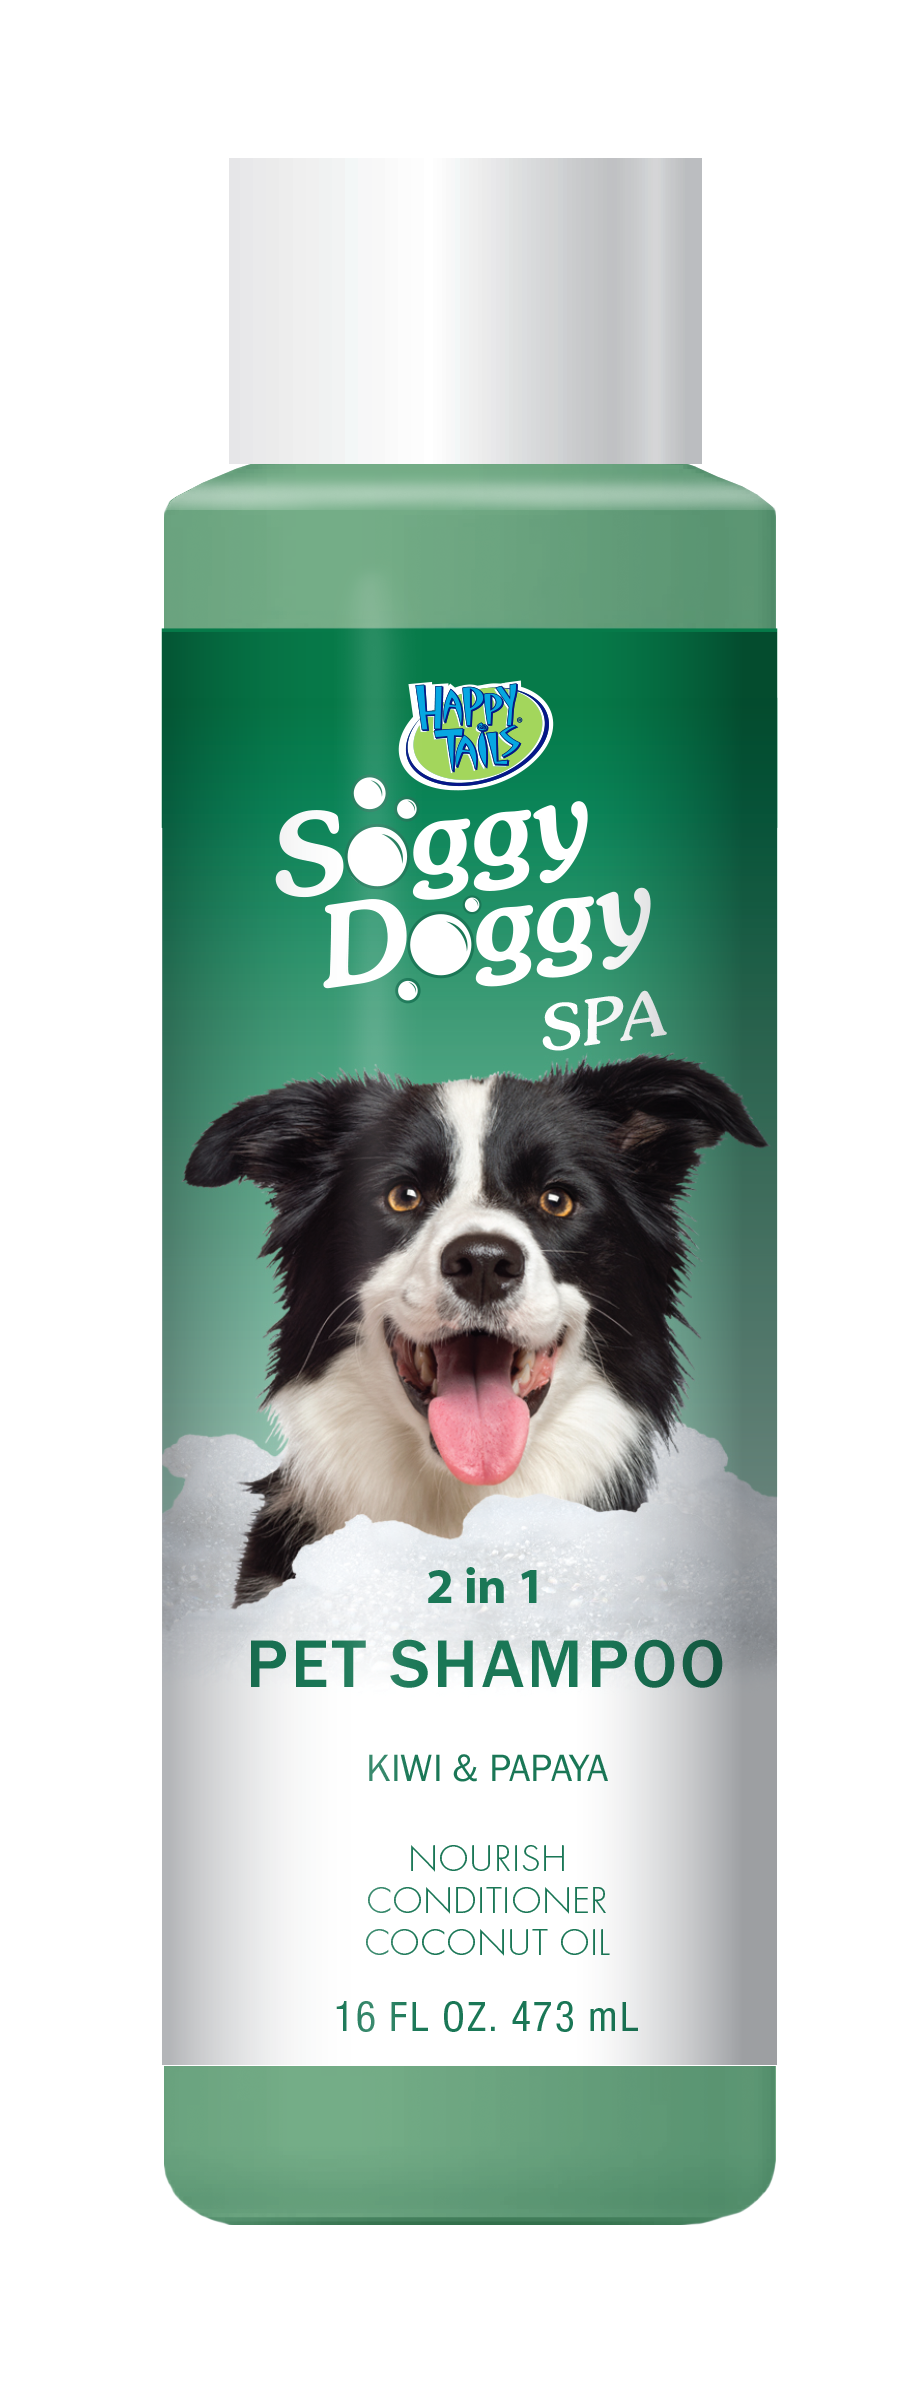 Happy Tails Soggy Doggy Spa Oatmeal Dog Shampoo - 16 fl oz